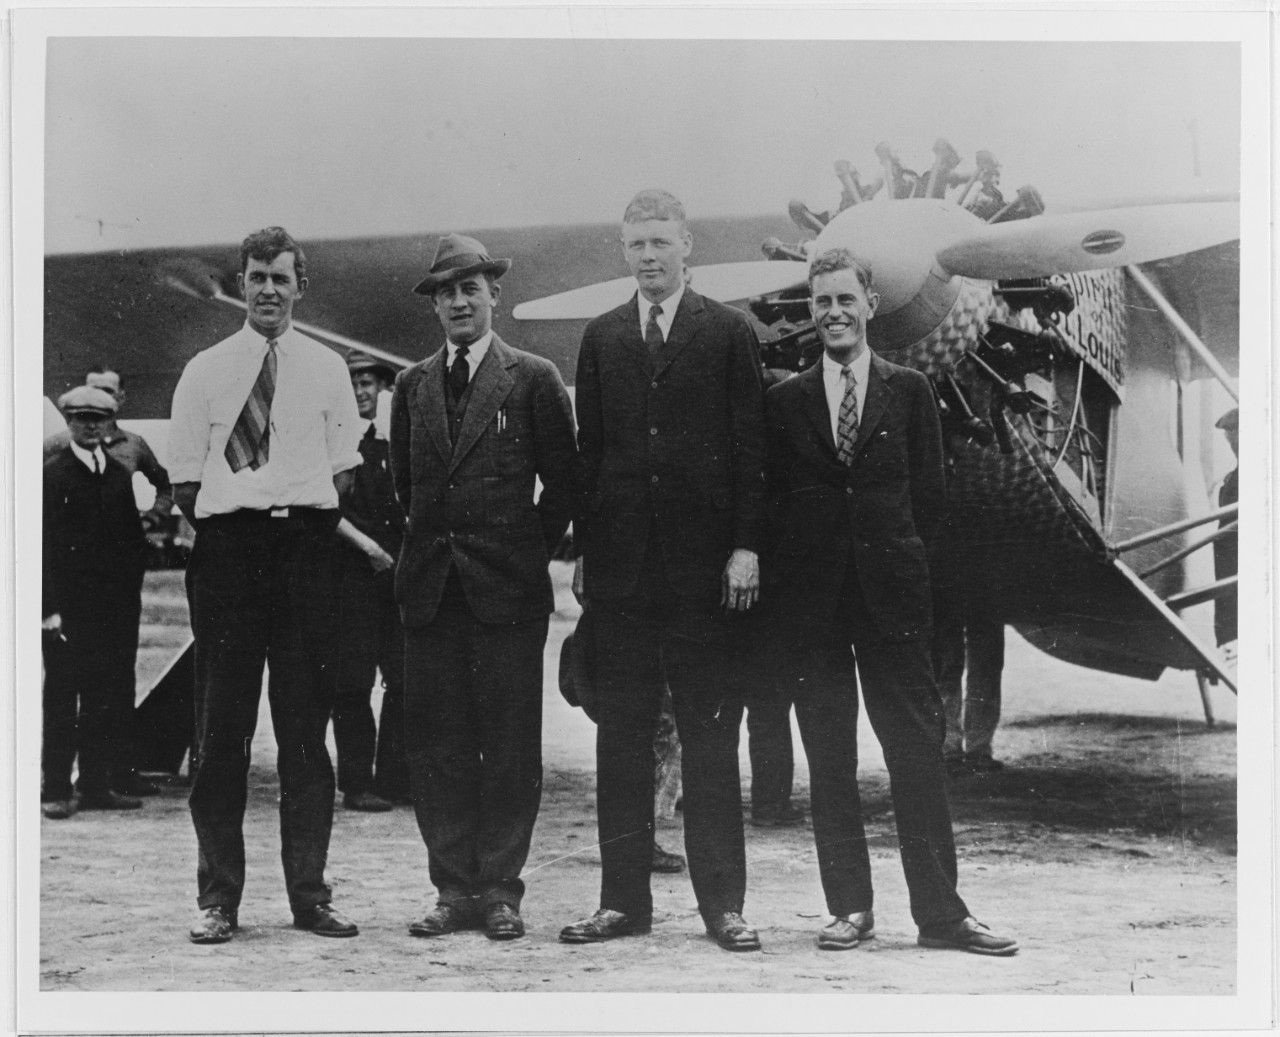 Captain Charles A. Lindbergh, USA Air Service Reserve